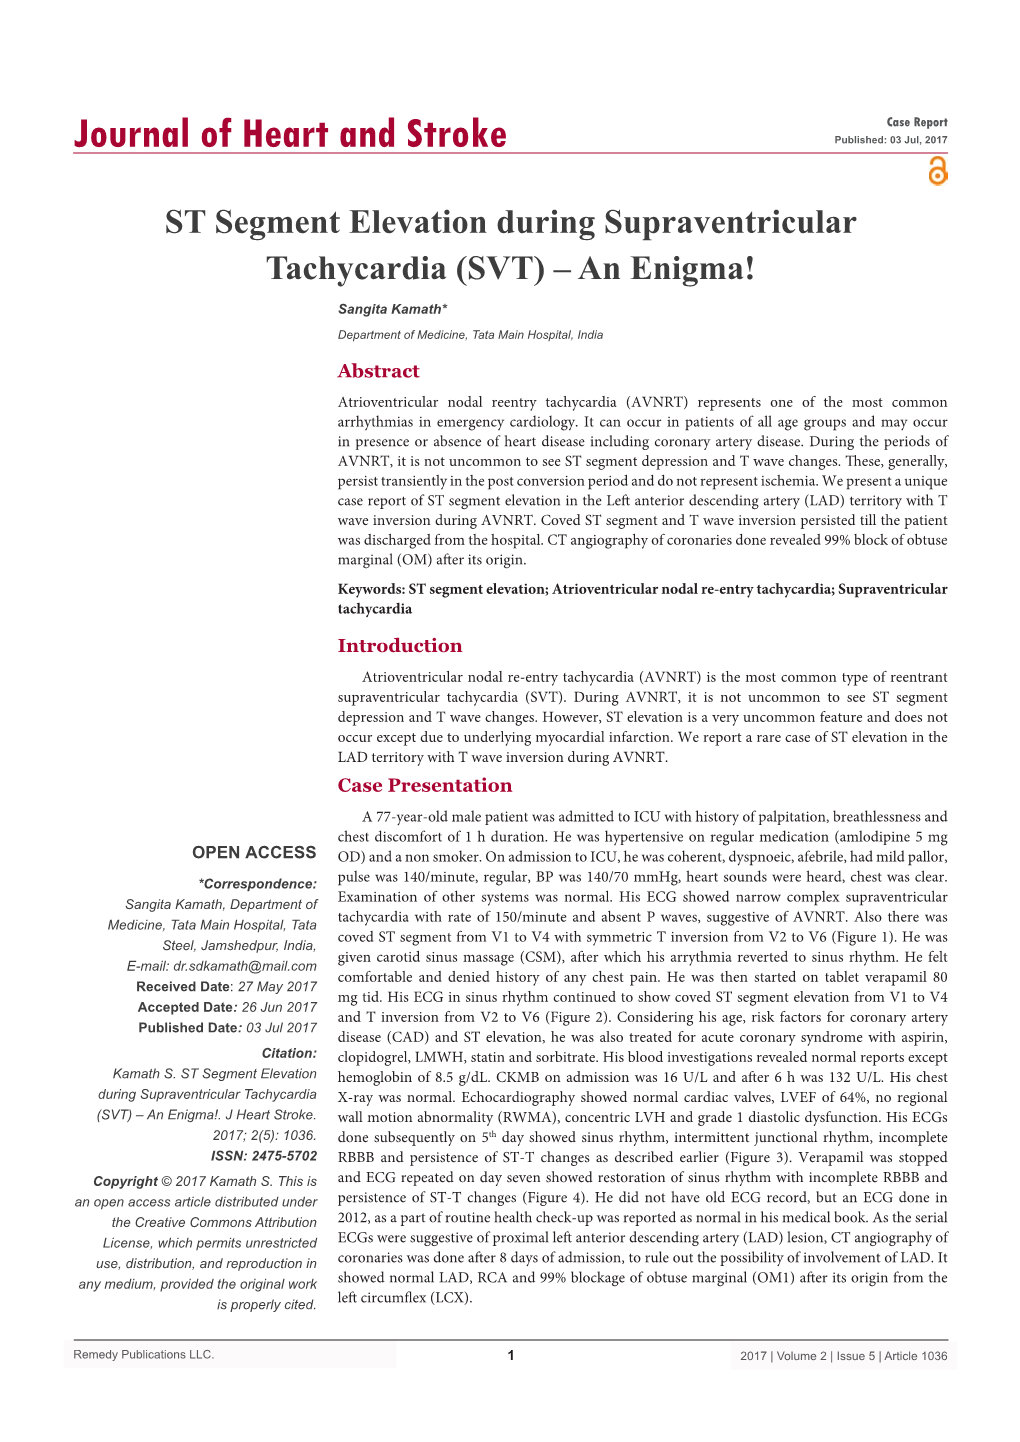 ST Segment Elevation During Supraventricular Tachycardia (SVT) – an Enigma!